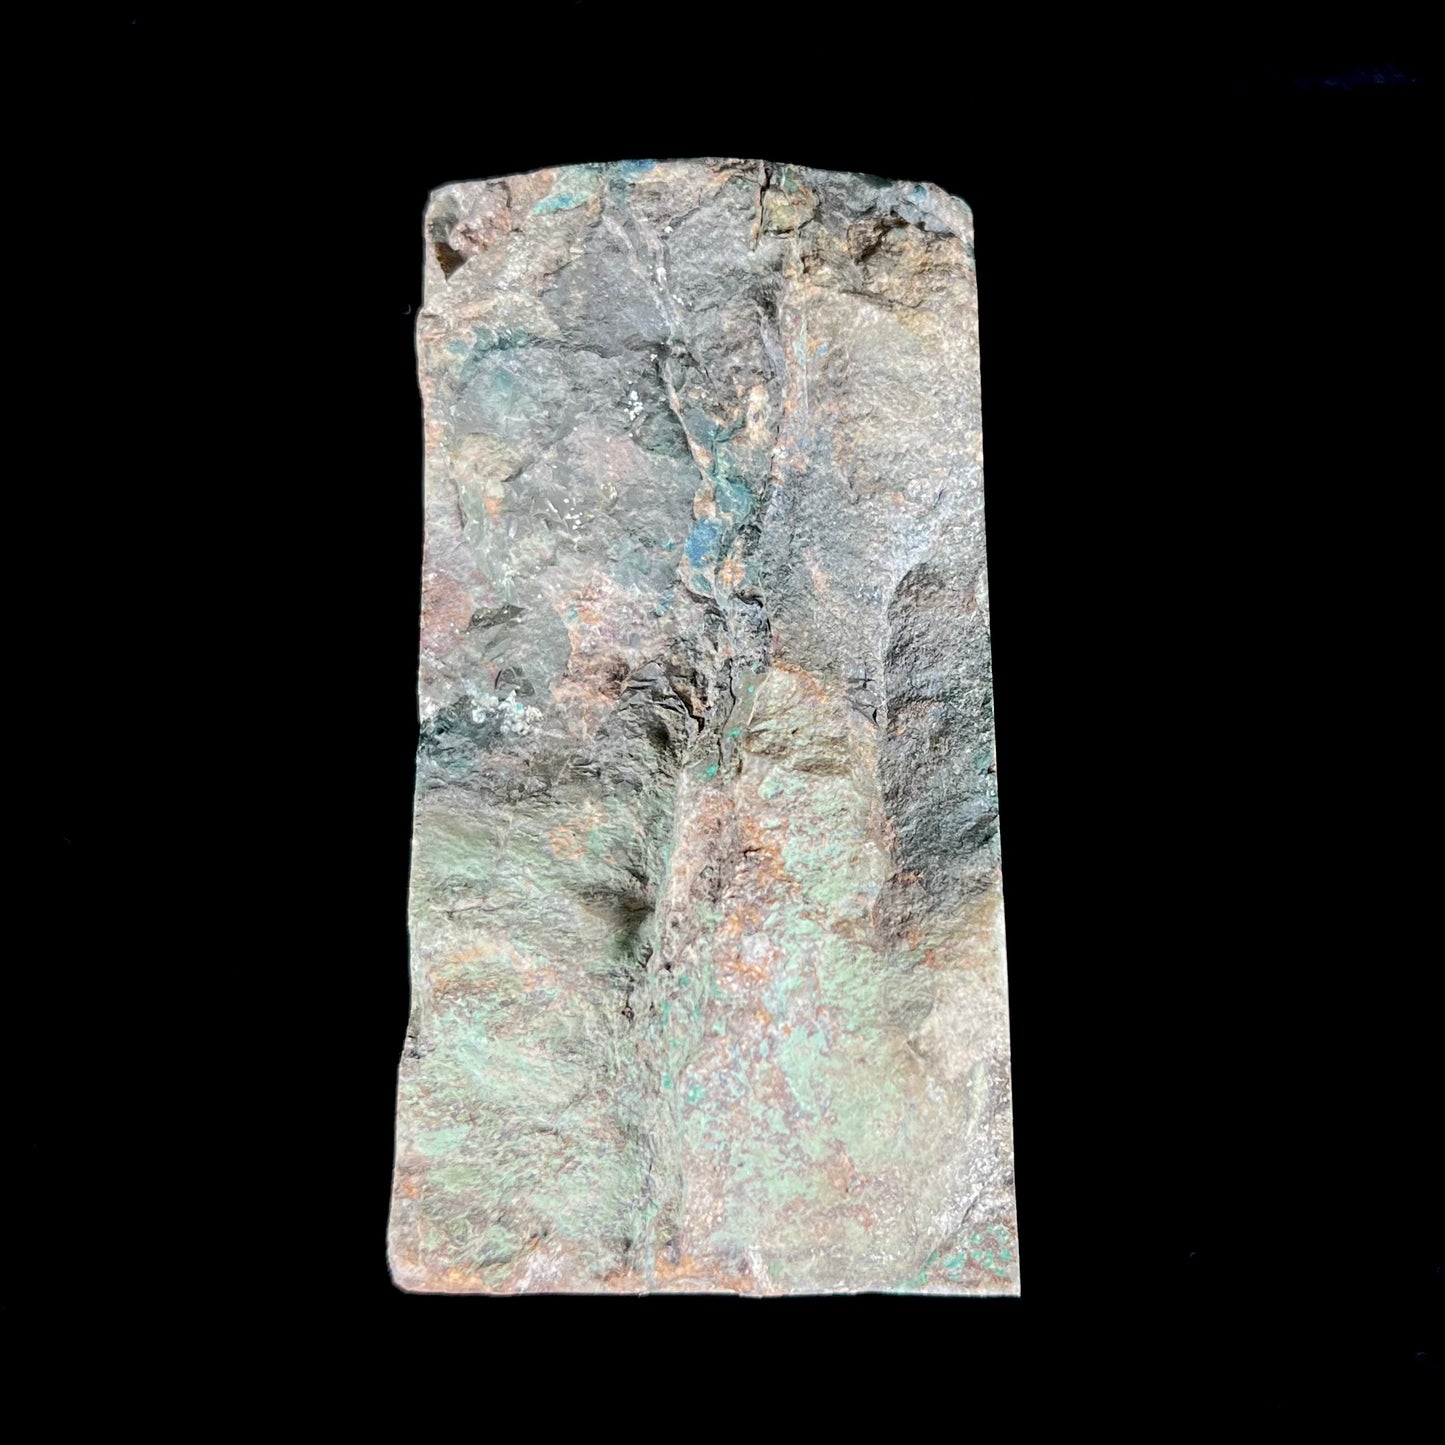 A polished Eilat stone specimen from King Solomon's Mine, Israel.